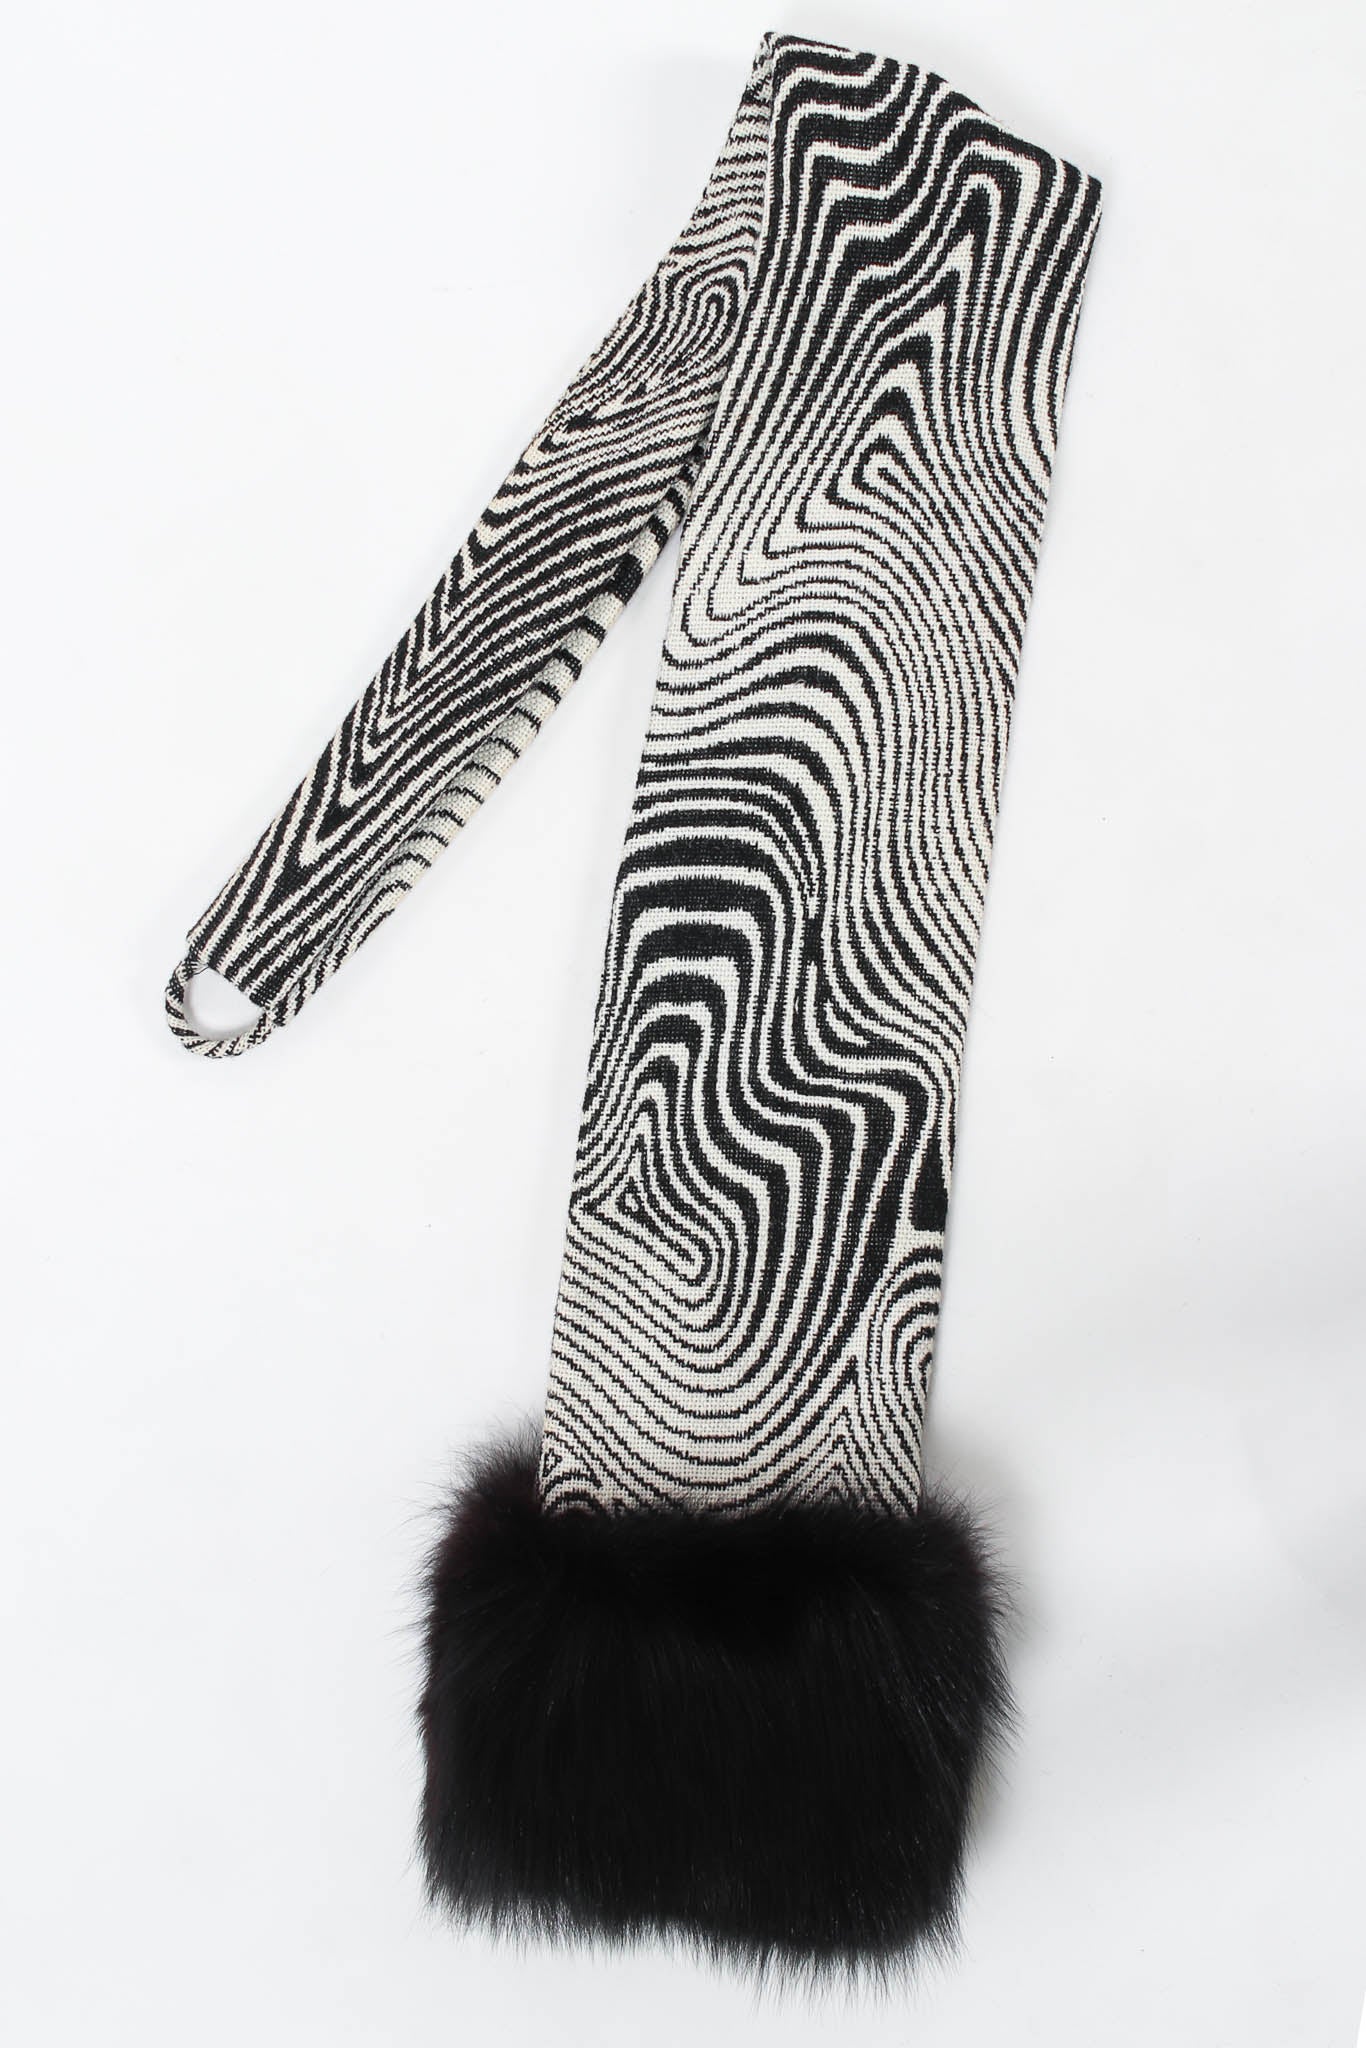 Vintage Pierre Cardin Abstract Ripple Wool Coat & Stole Set stole/scarf reverse @ Recess LA